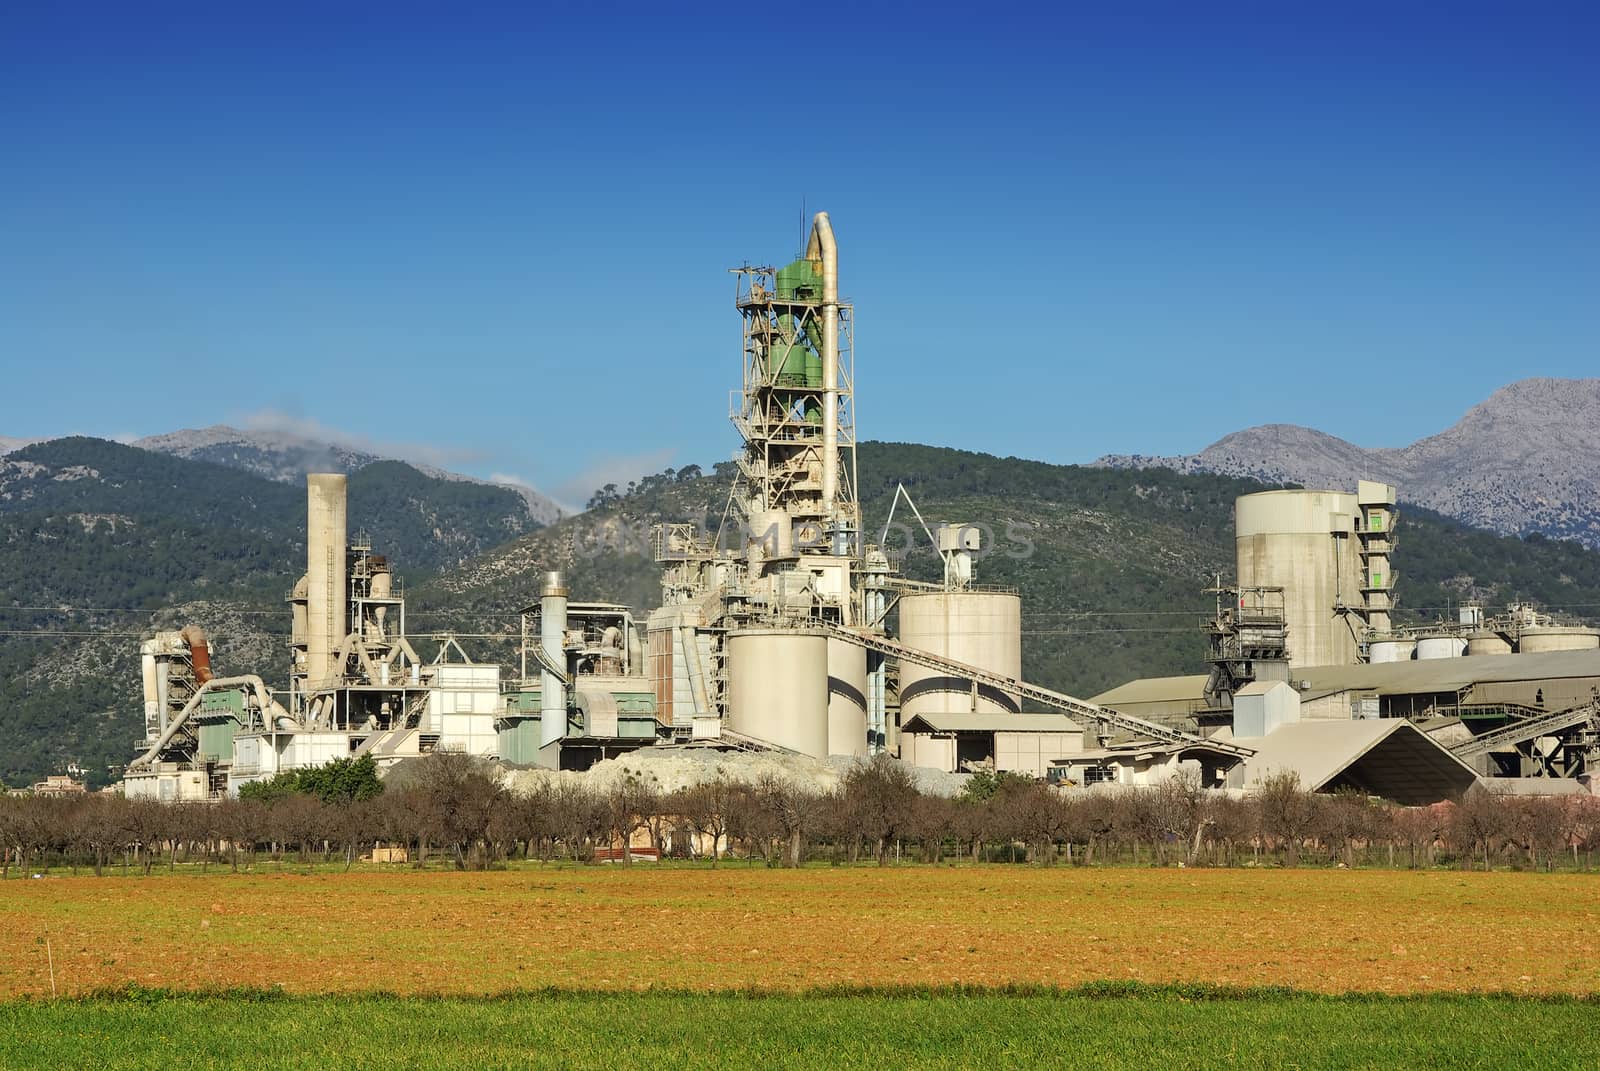 Cement Factory facilities in Majorca (Spain)